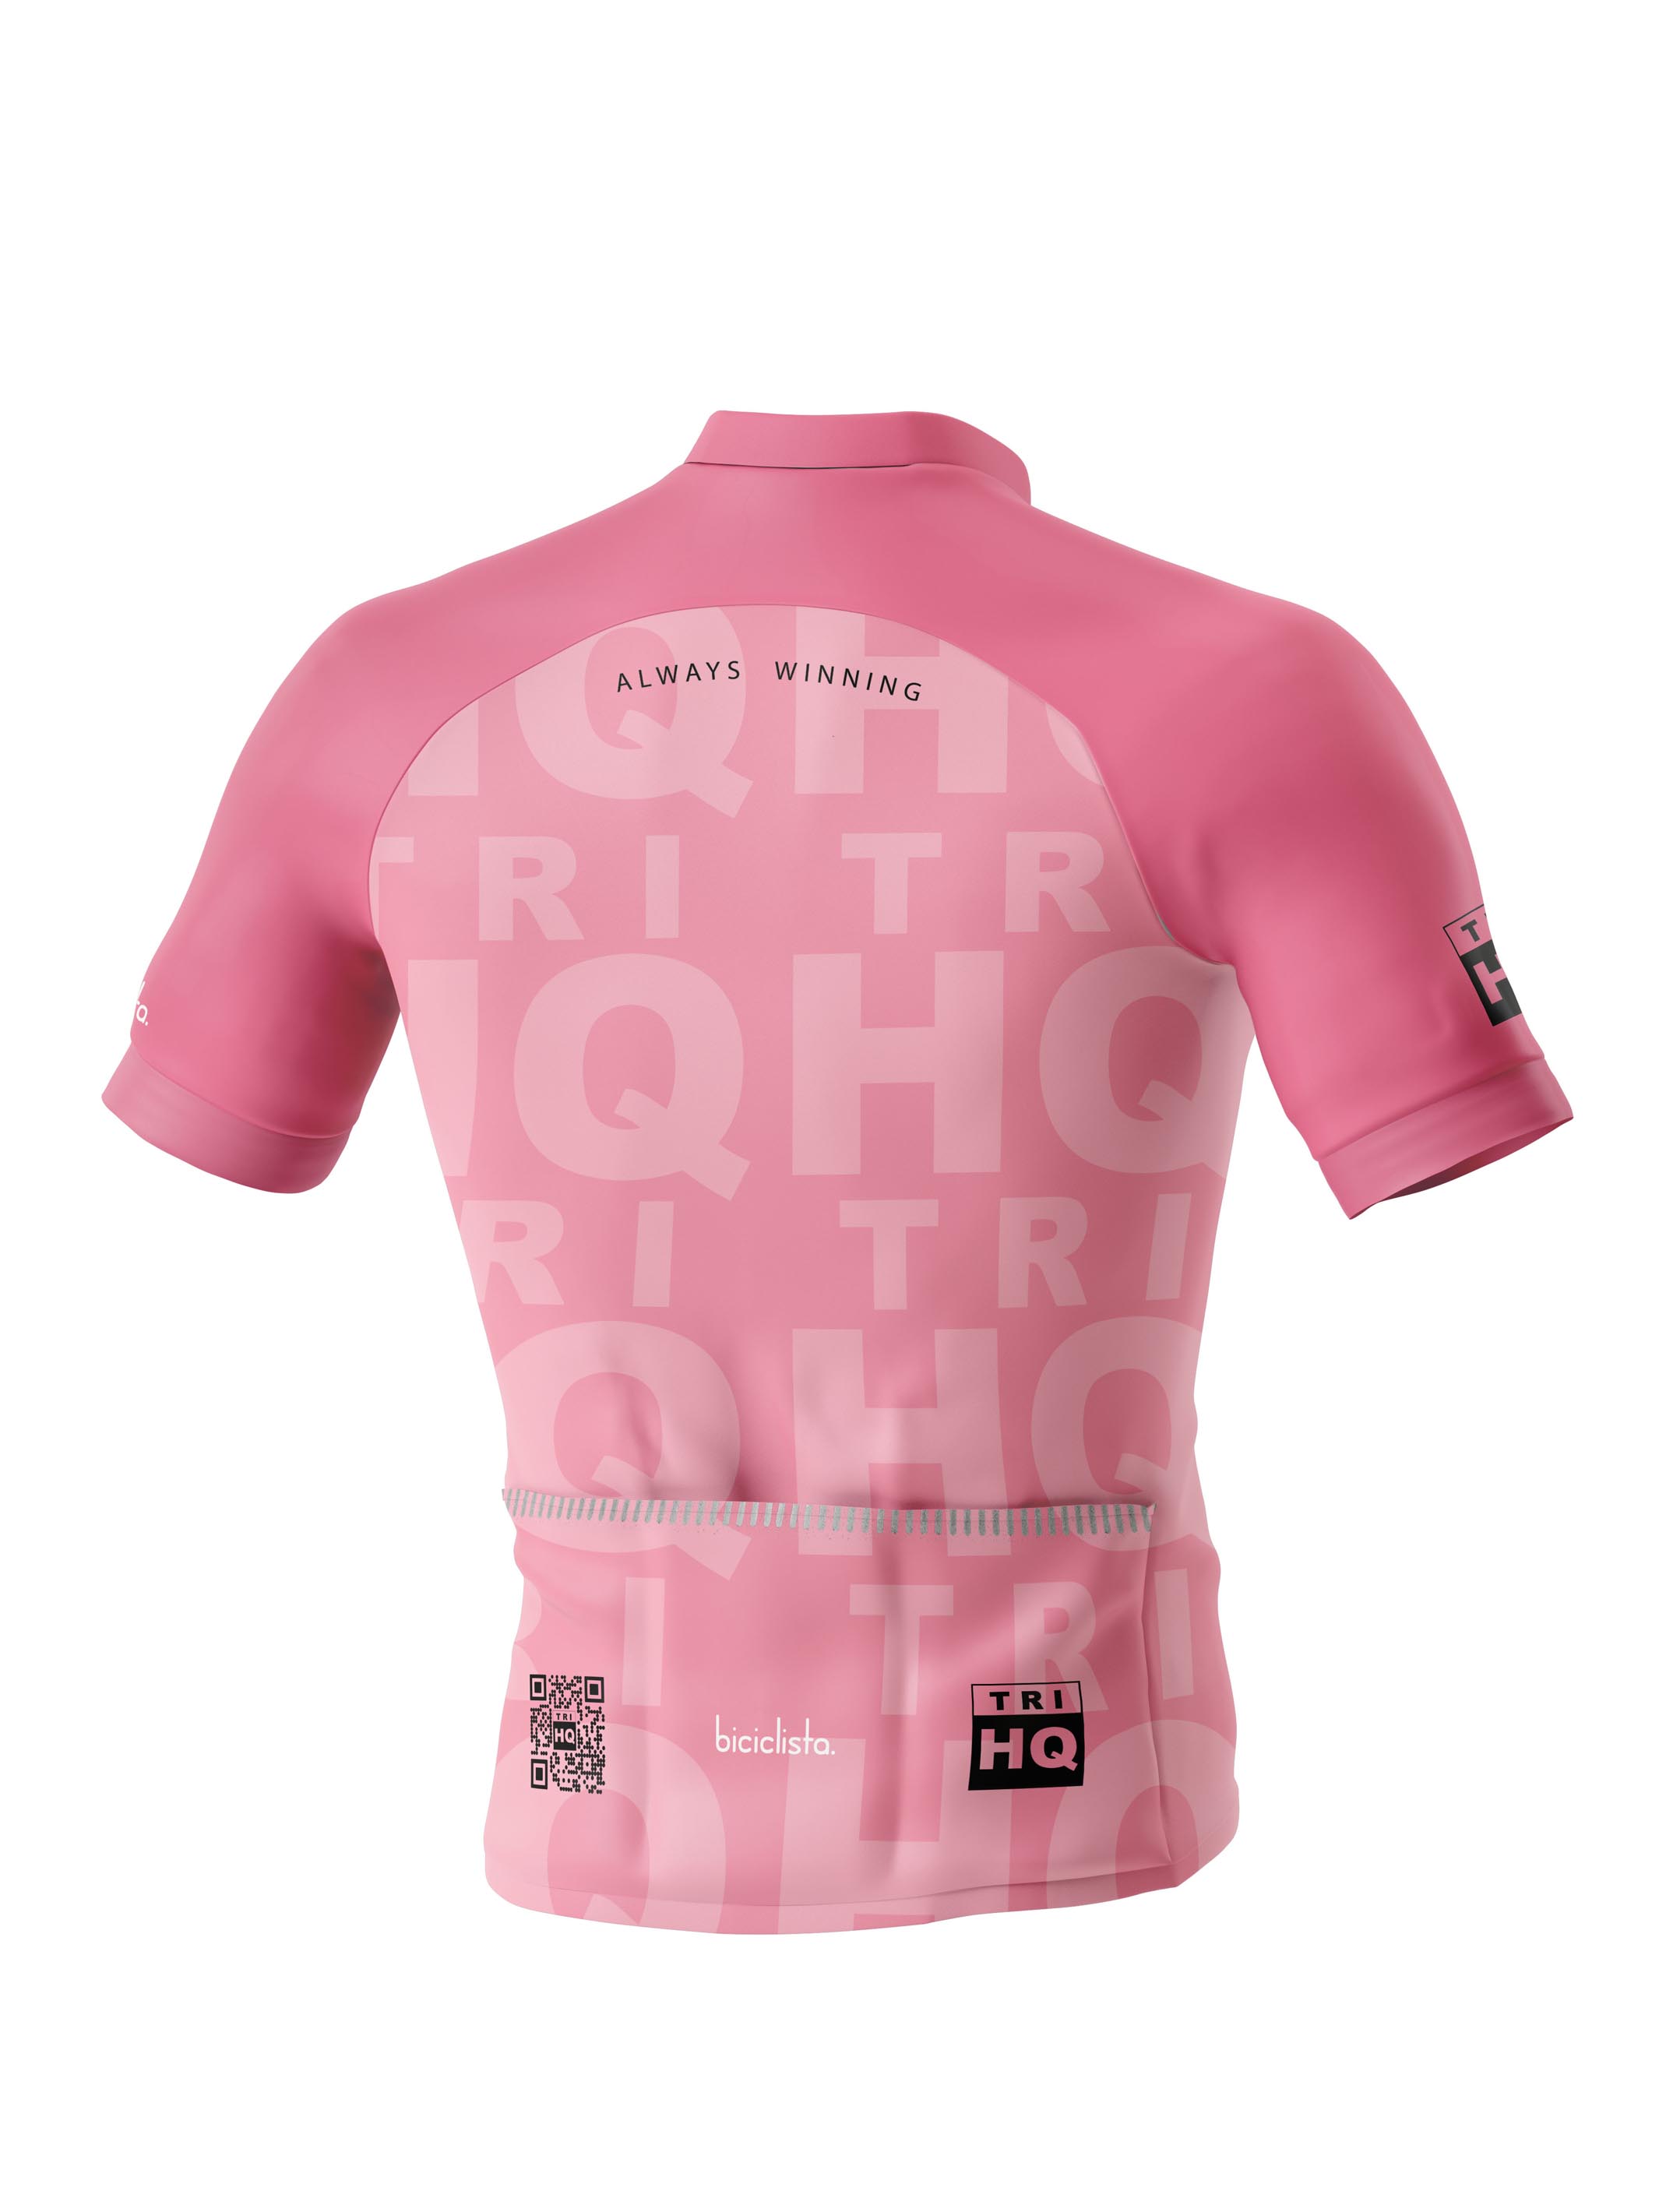 TRI HQ Pink Cycling Jersey